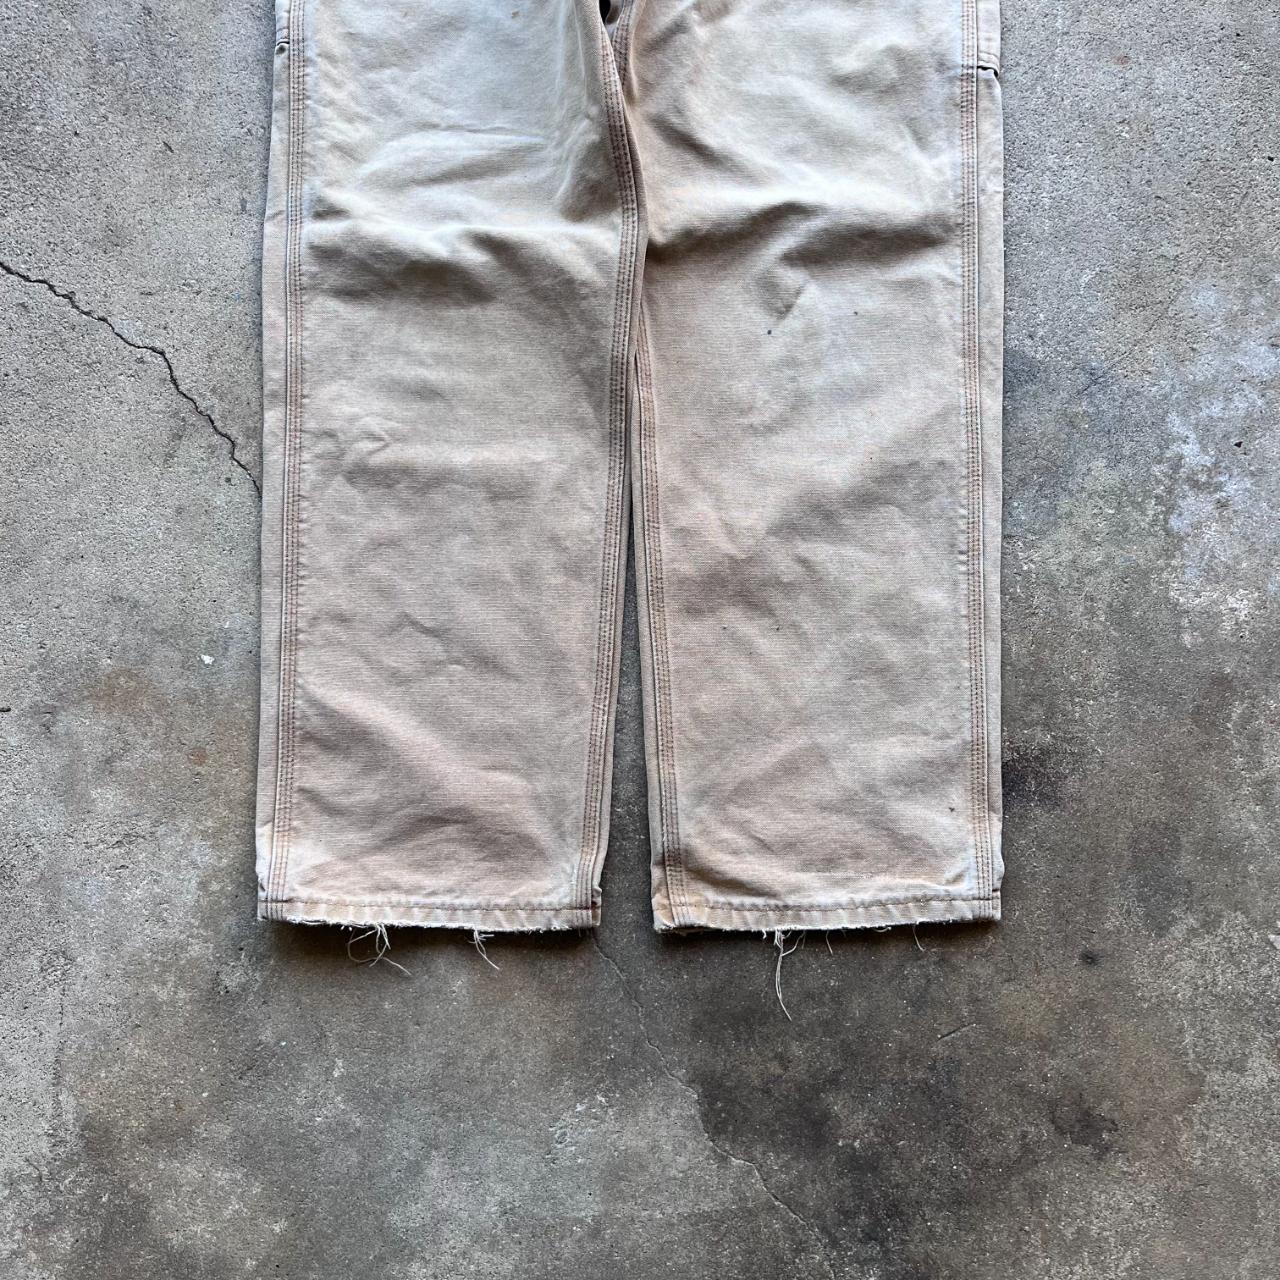 Carhartt Iconic Tan Carpenter Pants w/ Rip in Crotch [34 x 32]